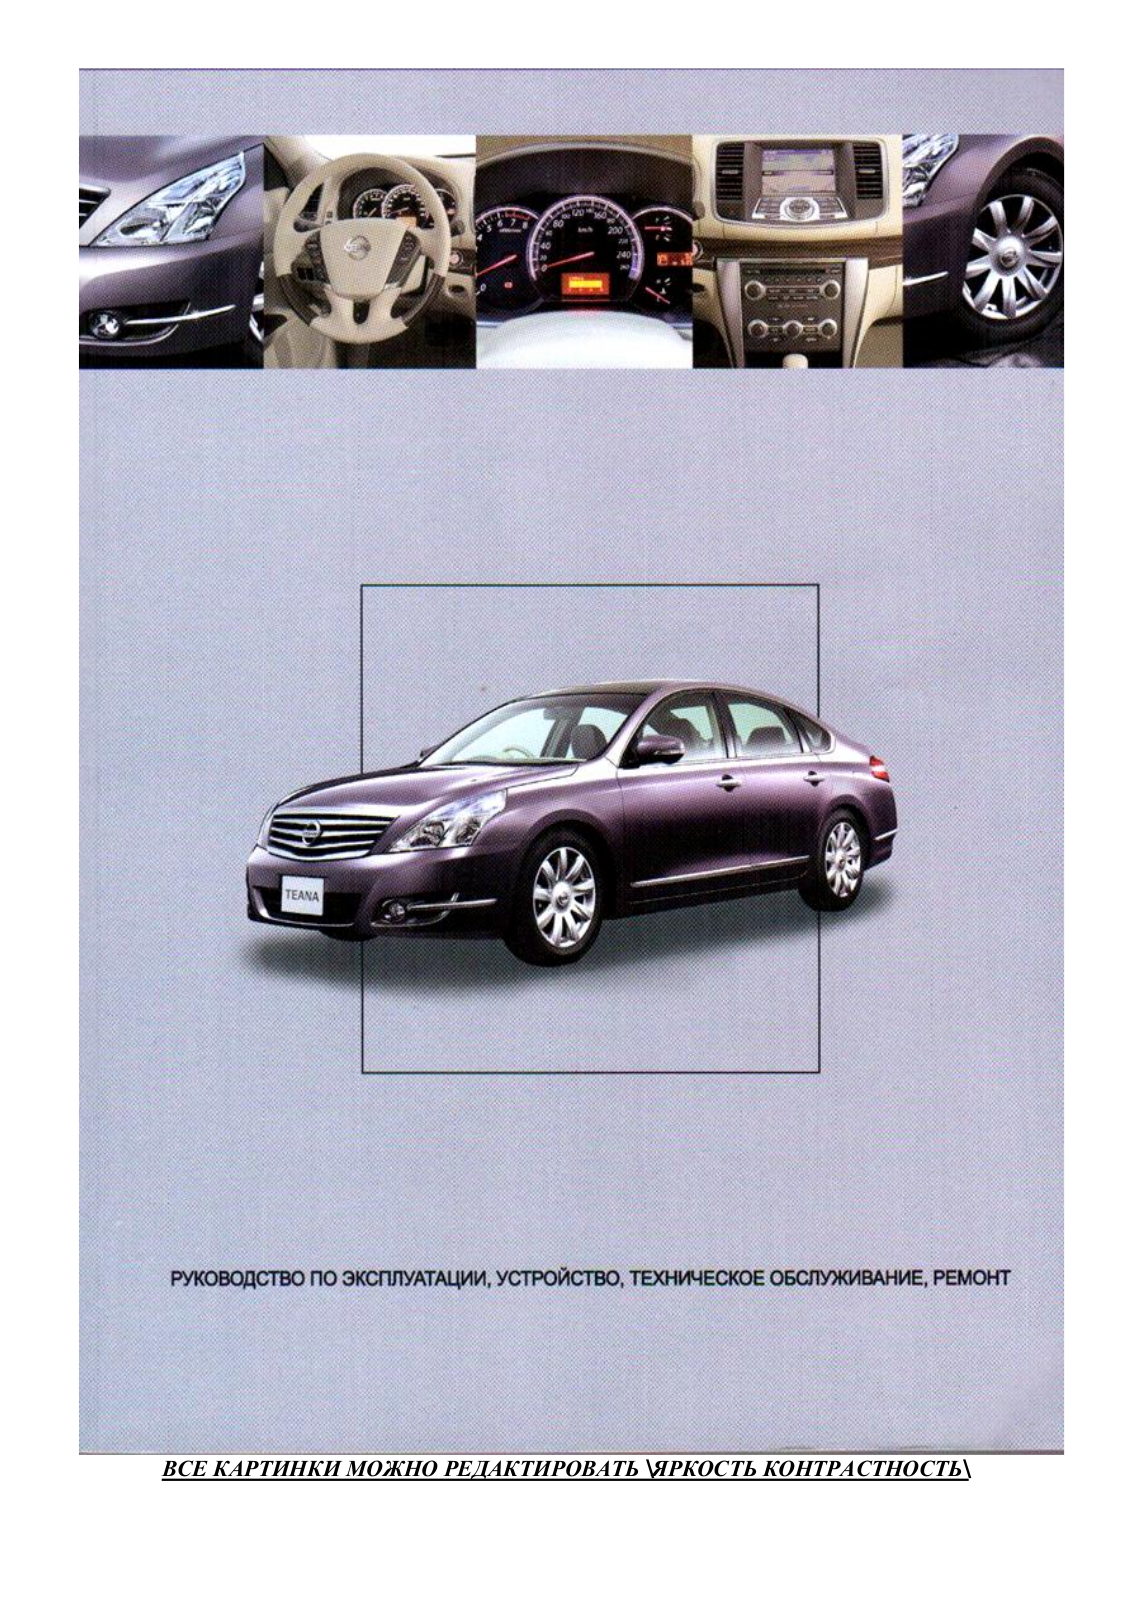 Nissan Teana 2008 User Manual